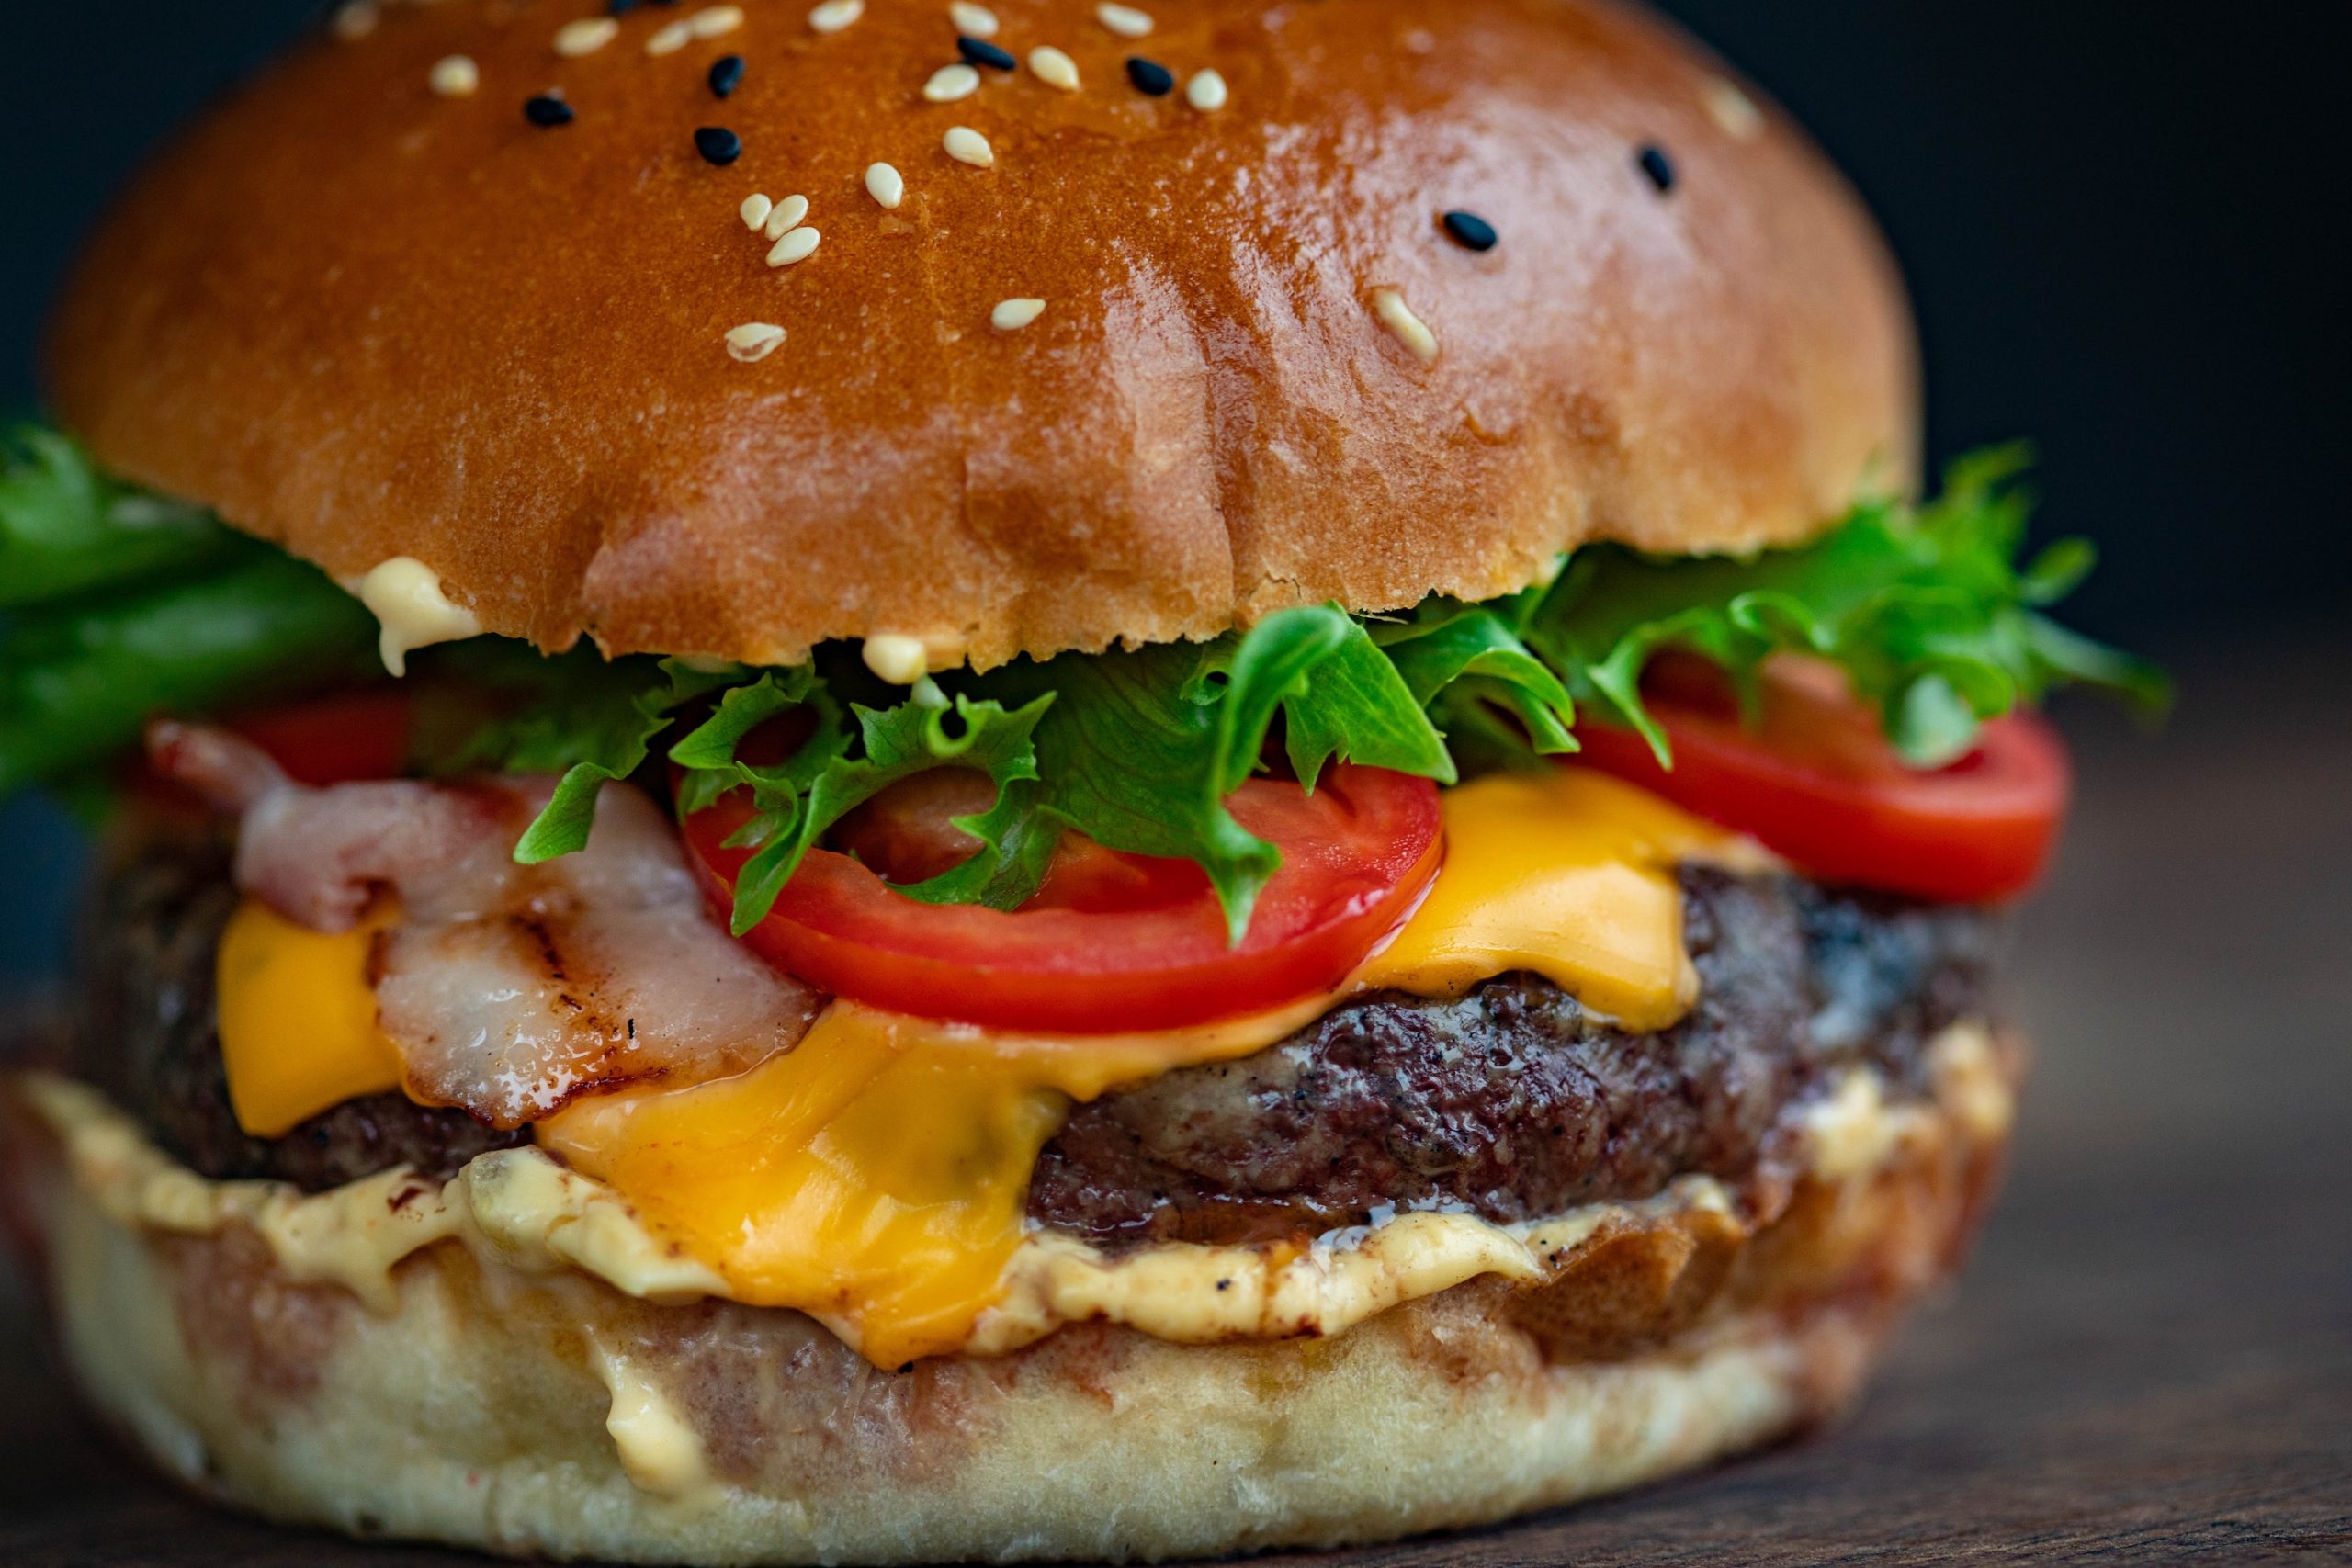 a photo of a cheeseburger